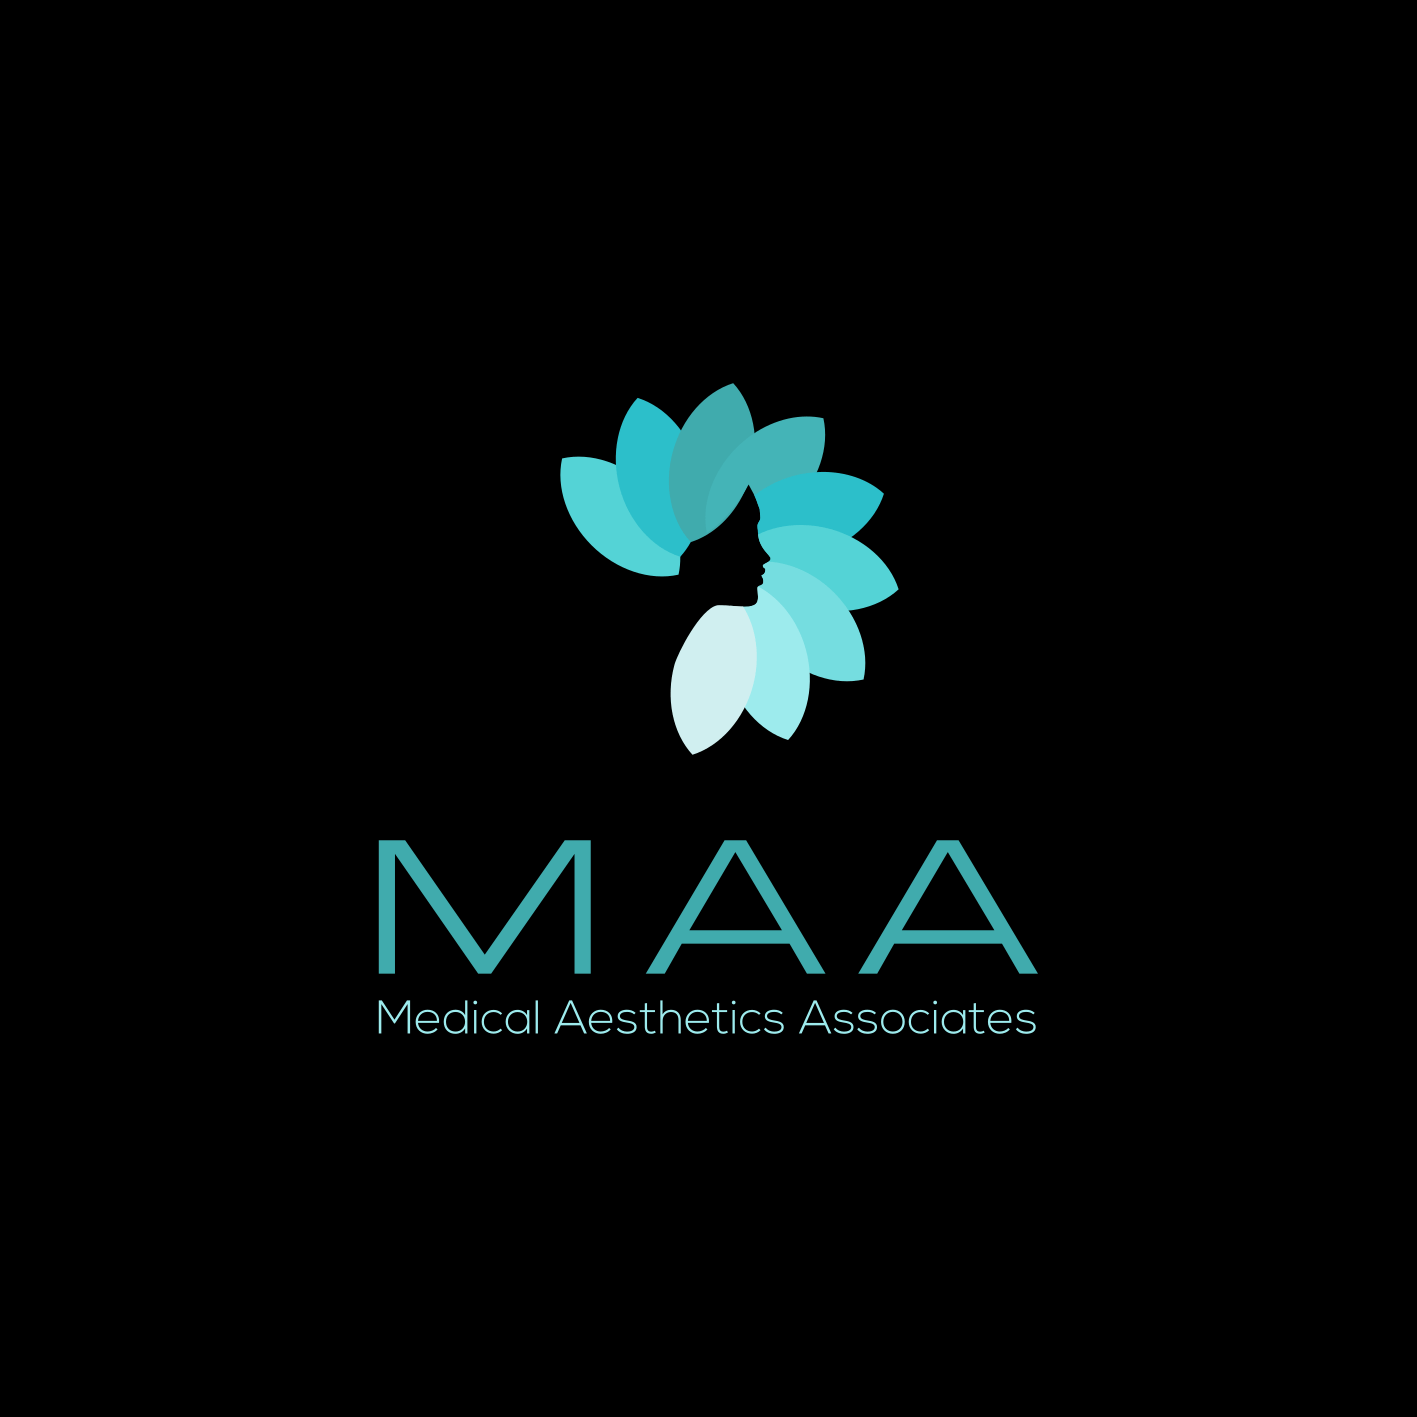 Maa Logo - Serious, Upmarket, Medical Logo Design for Medical Aesthetics